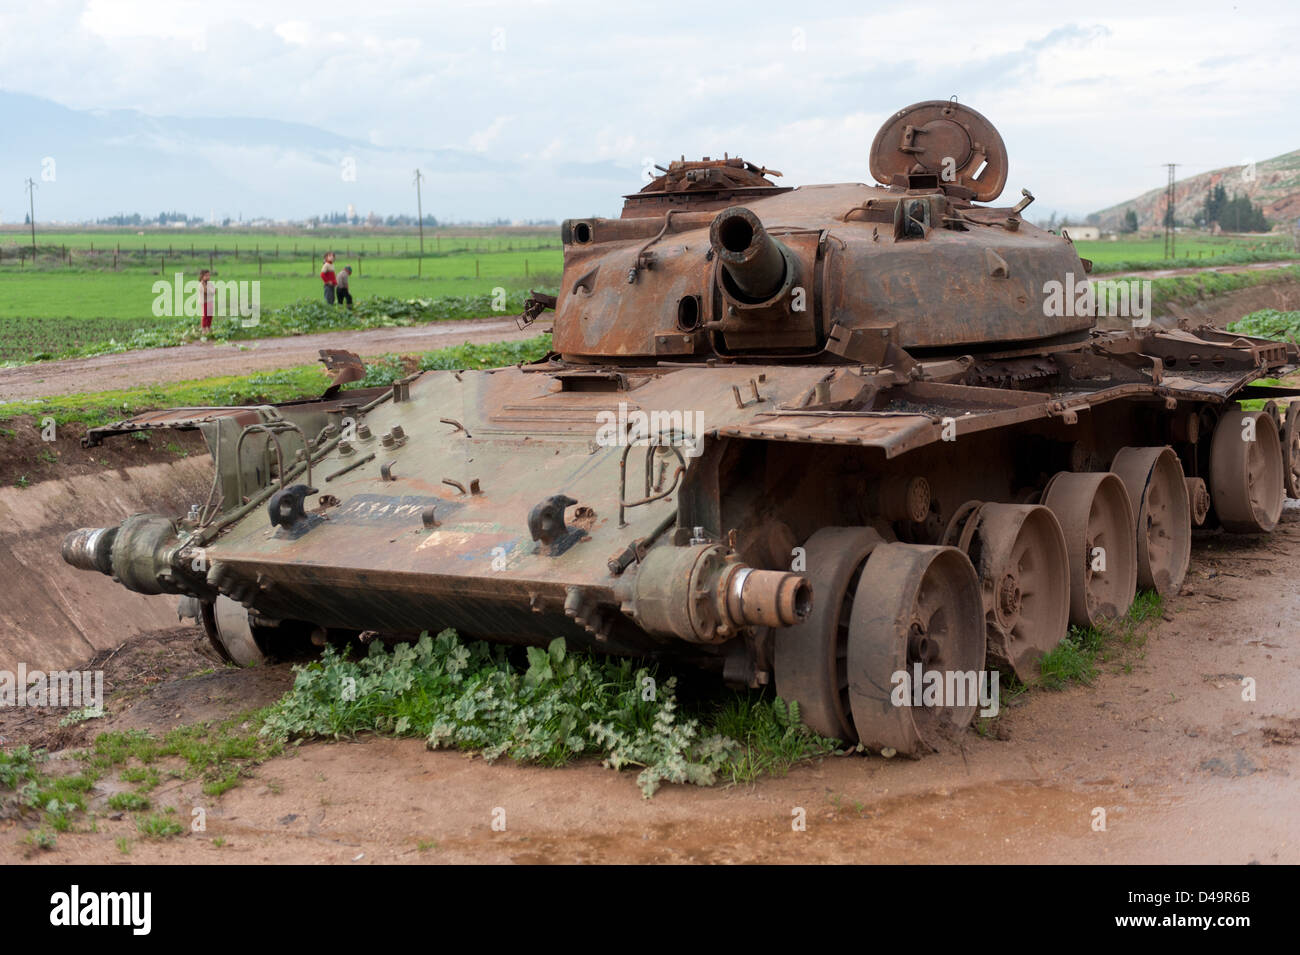 A destroyed tank of the Assad regime, Apamea, Syria Stock Photo